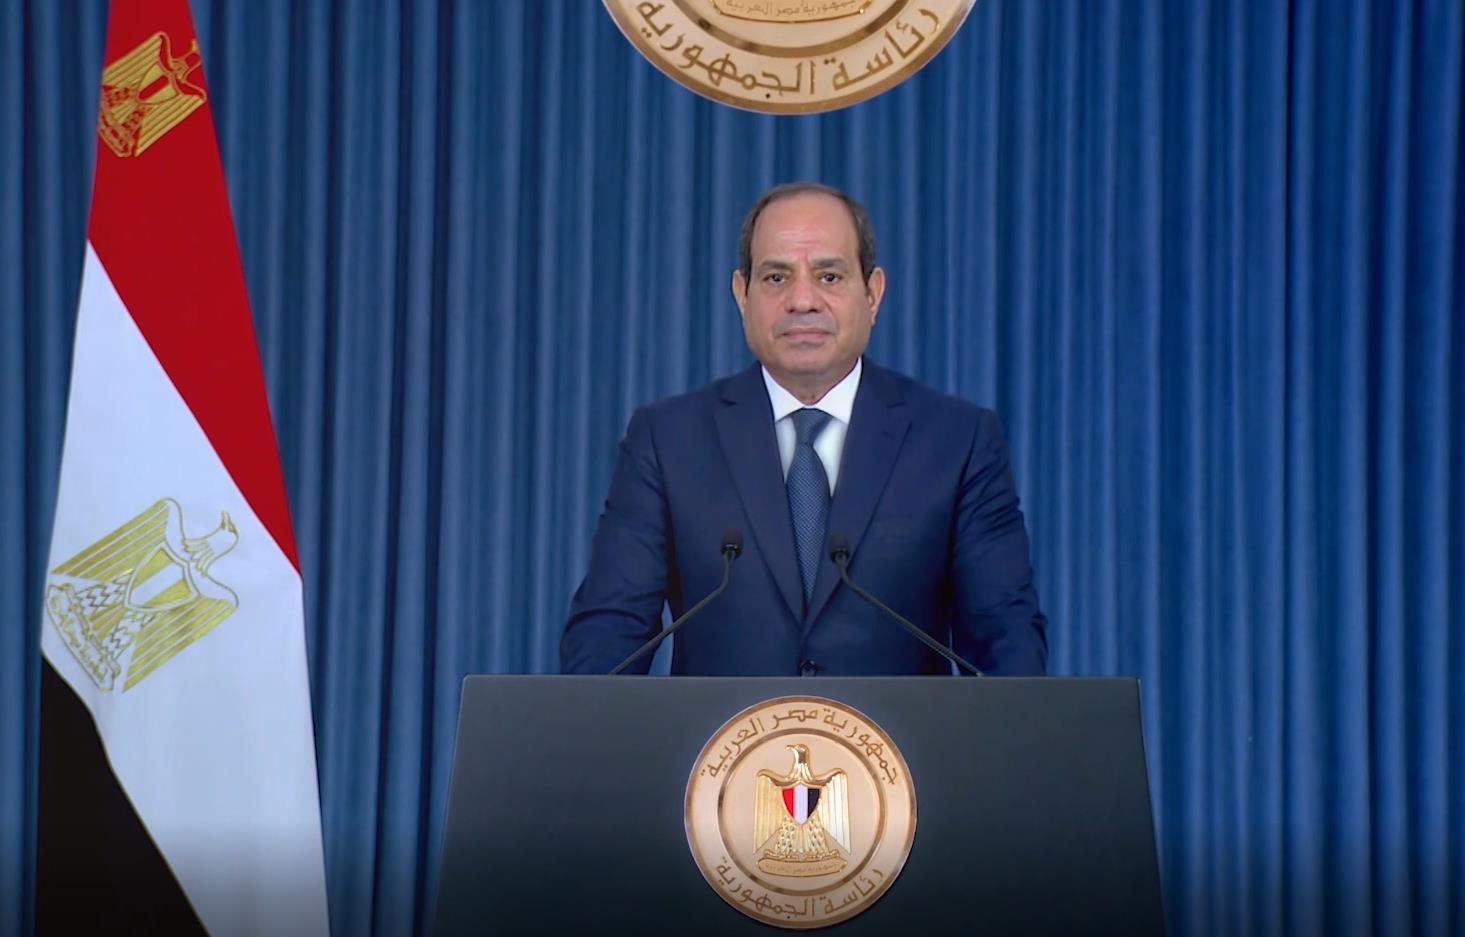 Egypt's President Al-Sisi Seeks Re-Election In 2024